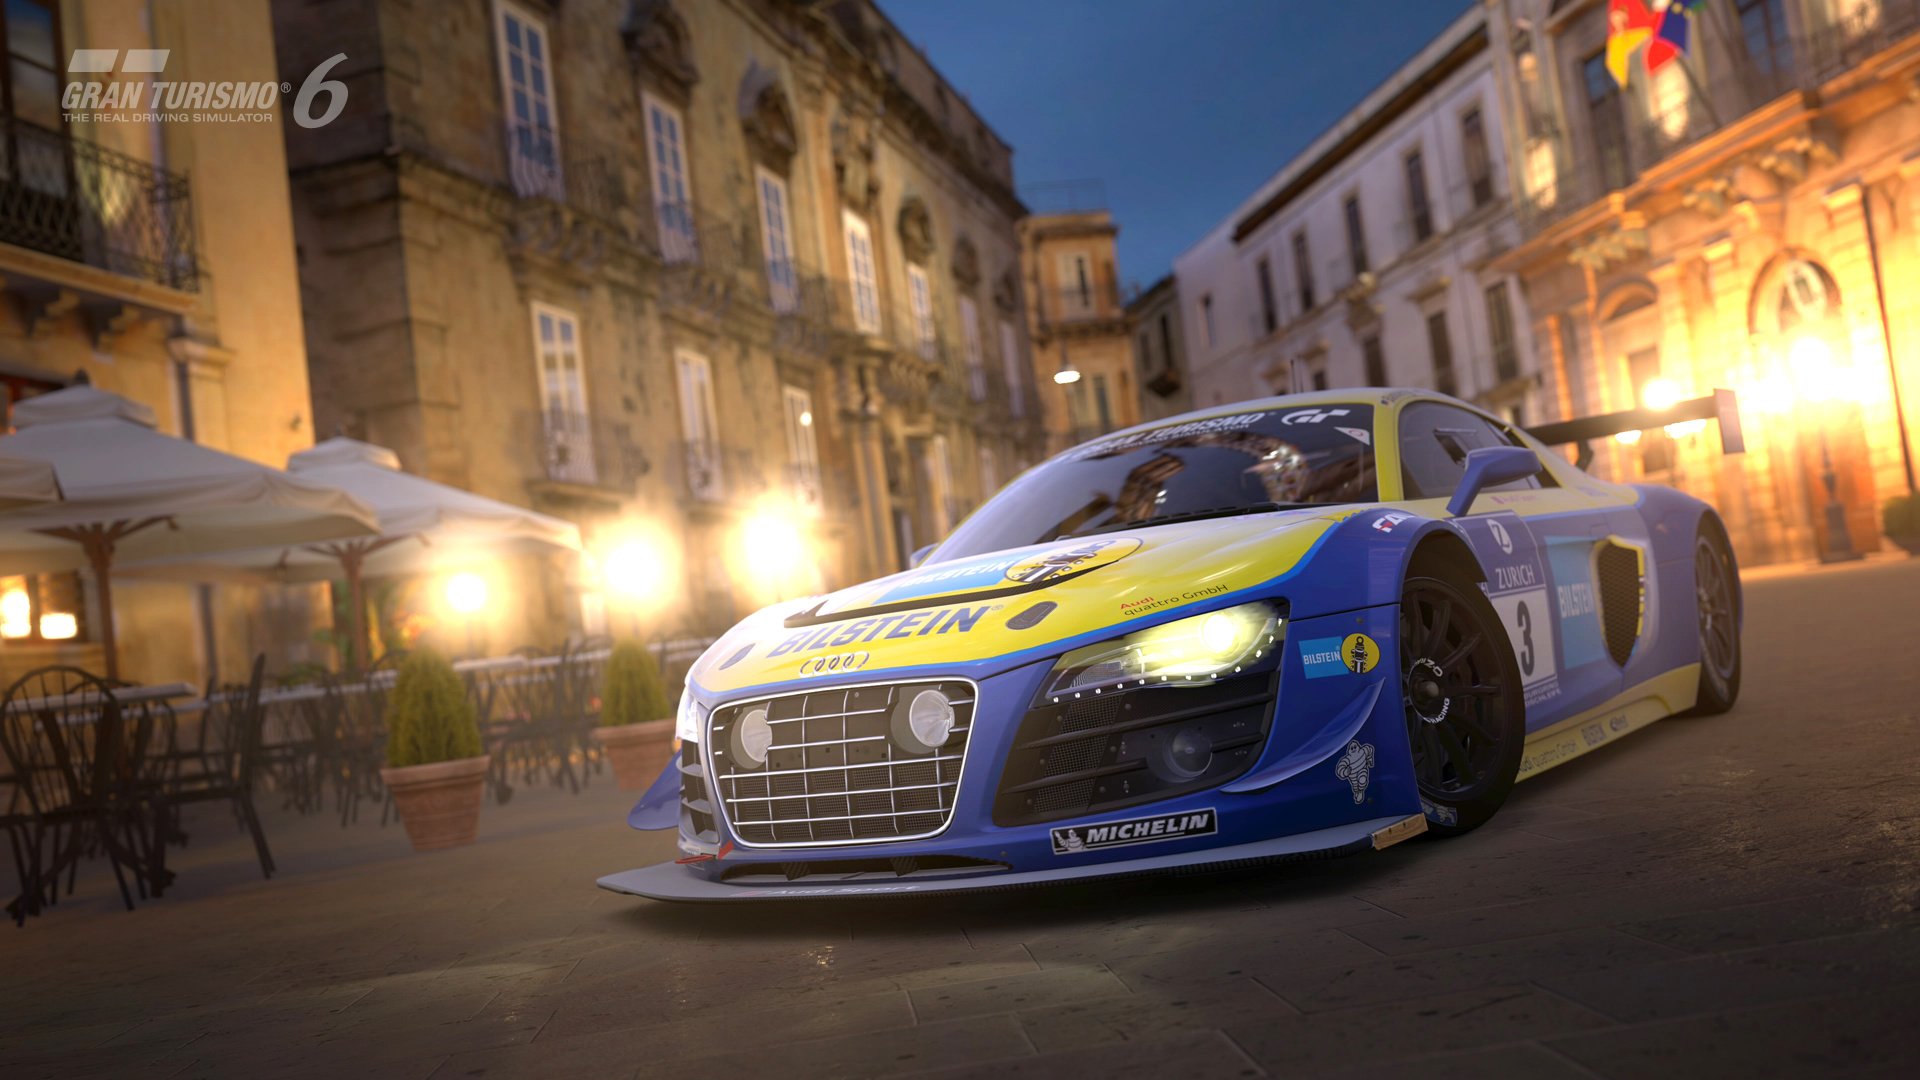 Gran Turismo 6 (PS3 / PlayStation 3) Game Profile | News, Reviews